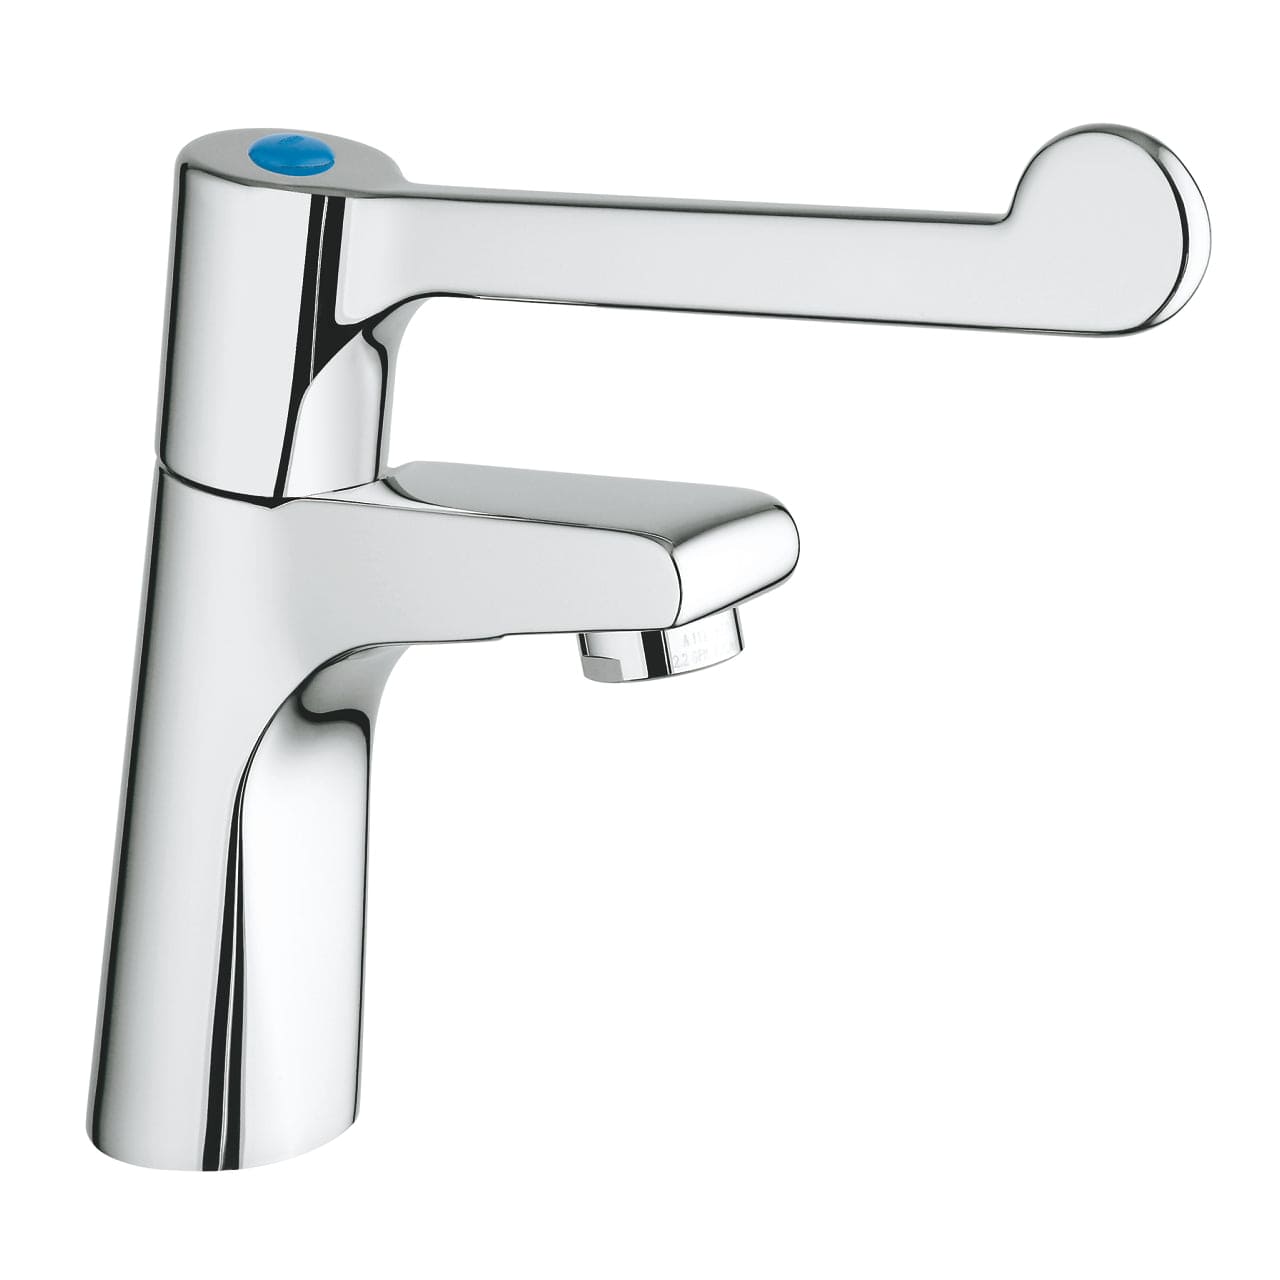 Grohe Hospita Sink Pillar Tap, 1/2″, Chrome | Supply Master | Accra, Ghana Bathroom Faucet Buy Tools hardware Building materials